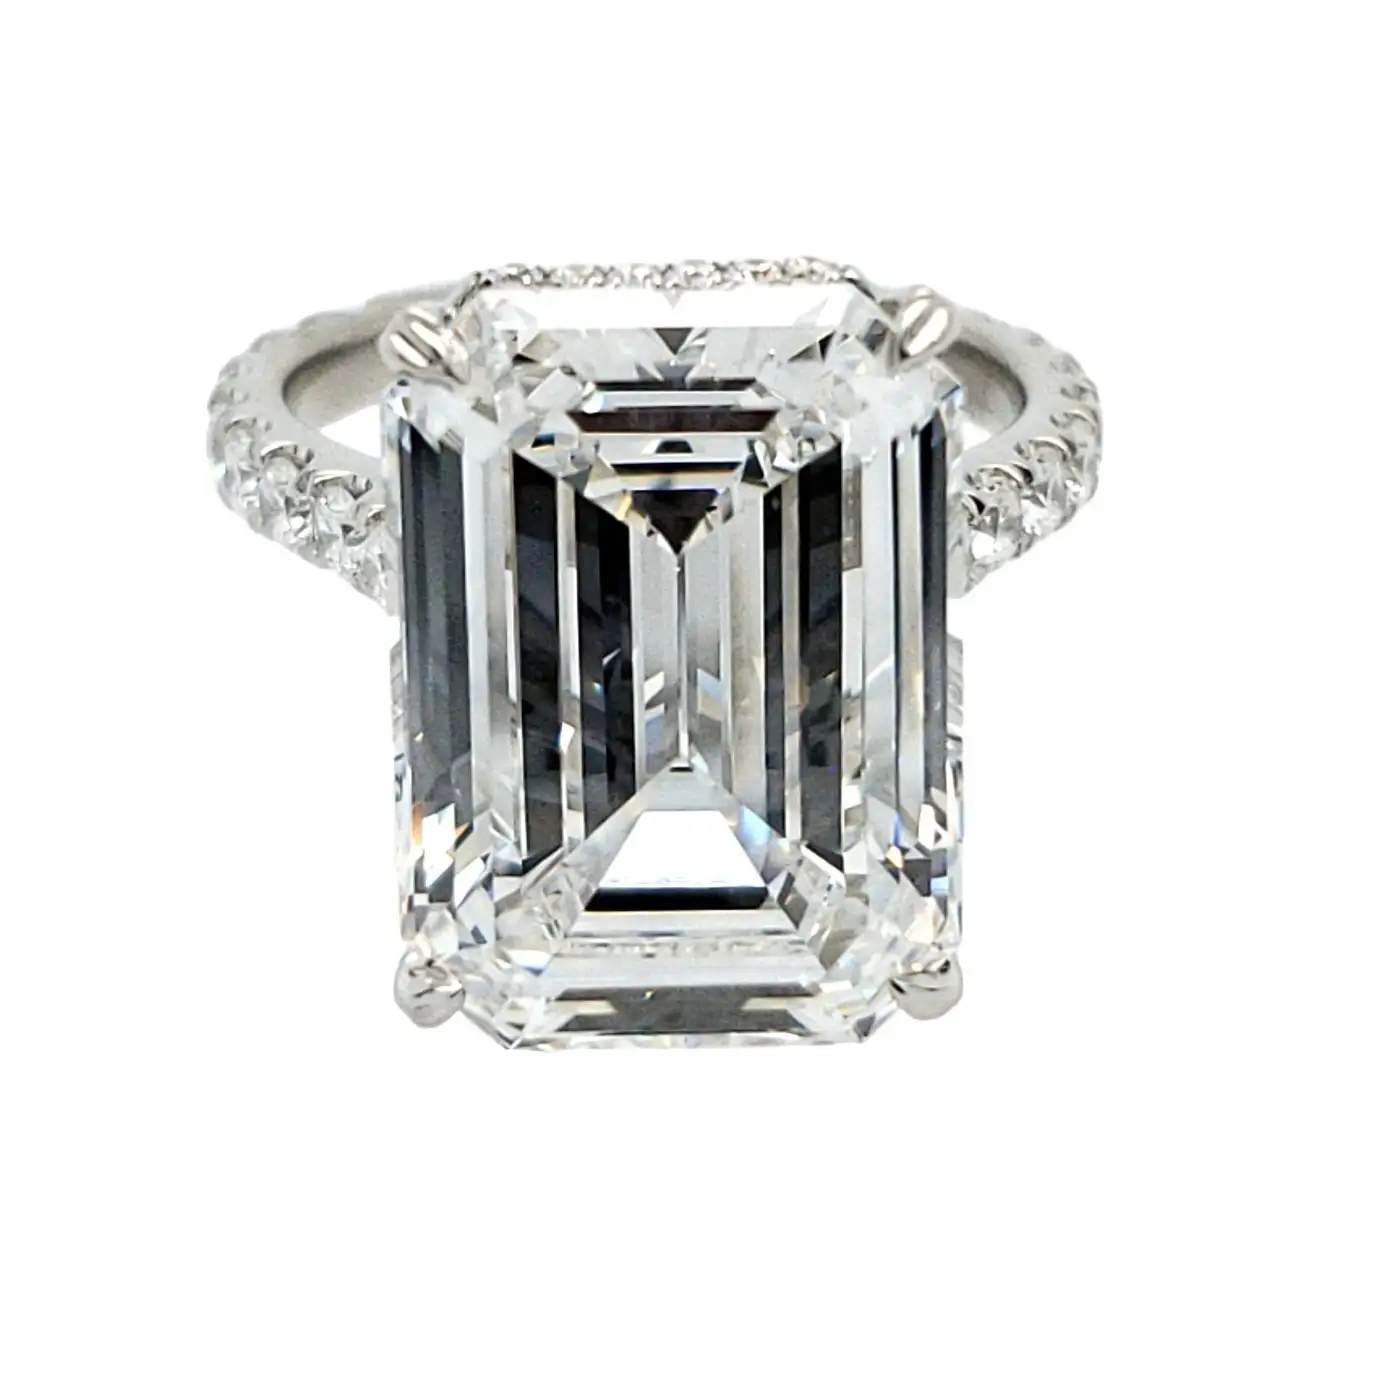 David-Rosenberg-10.41-Carat-Emerald-Cut-F-VVS2-GIA-Diamond-Engagement-Ring-9.webp